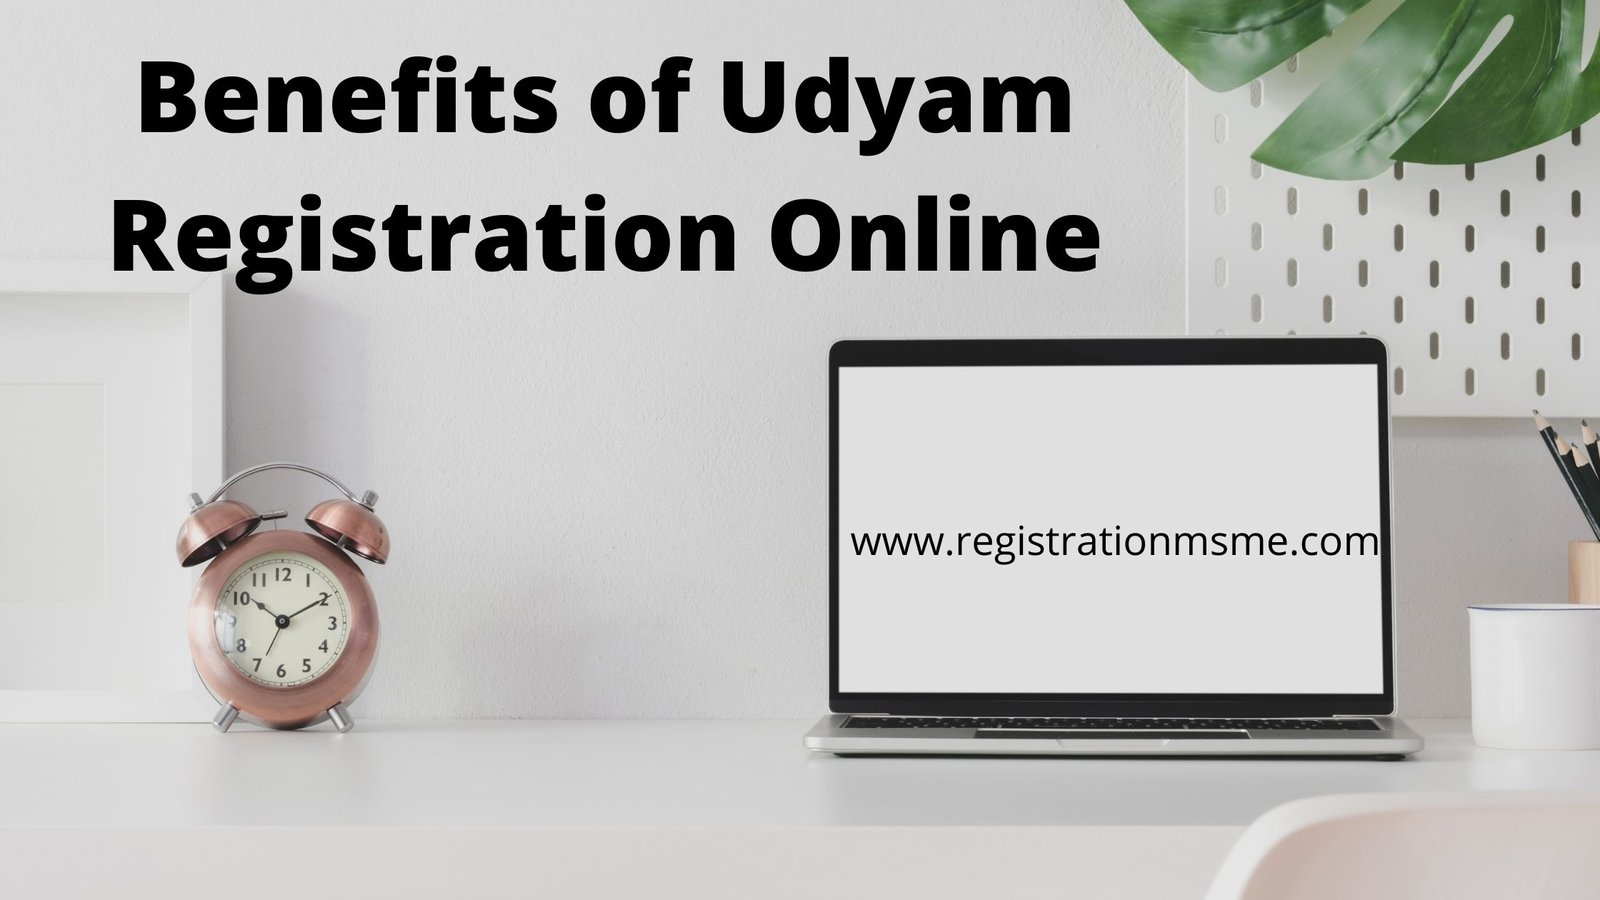 Udyam Registration Benefits in India